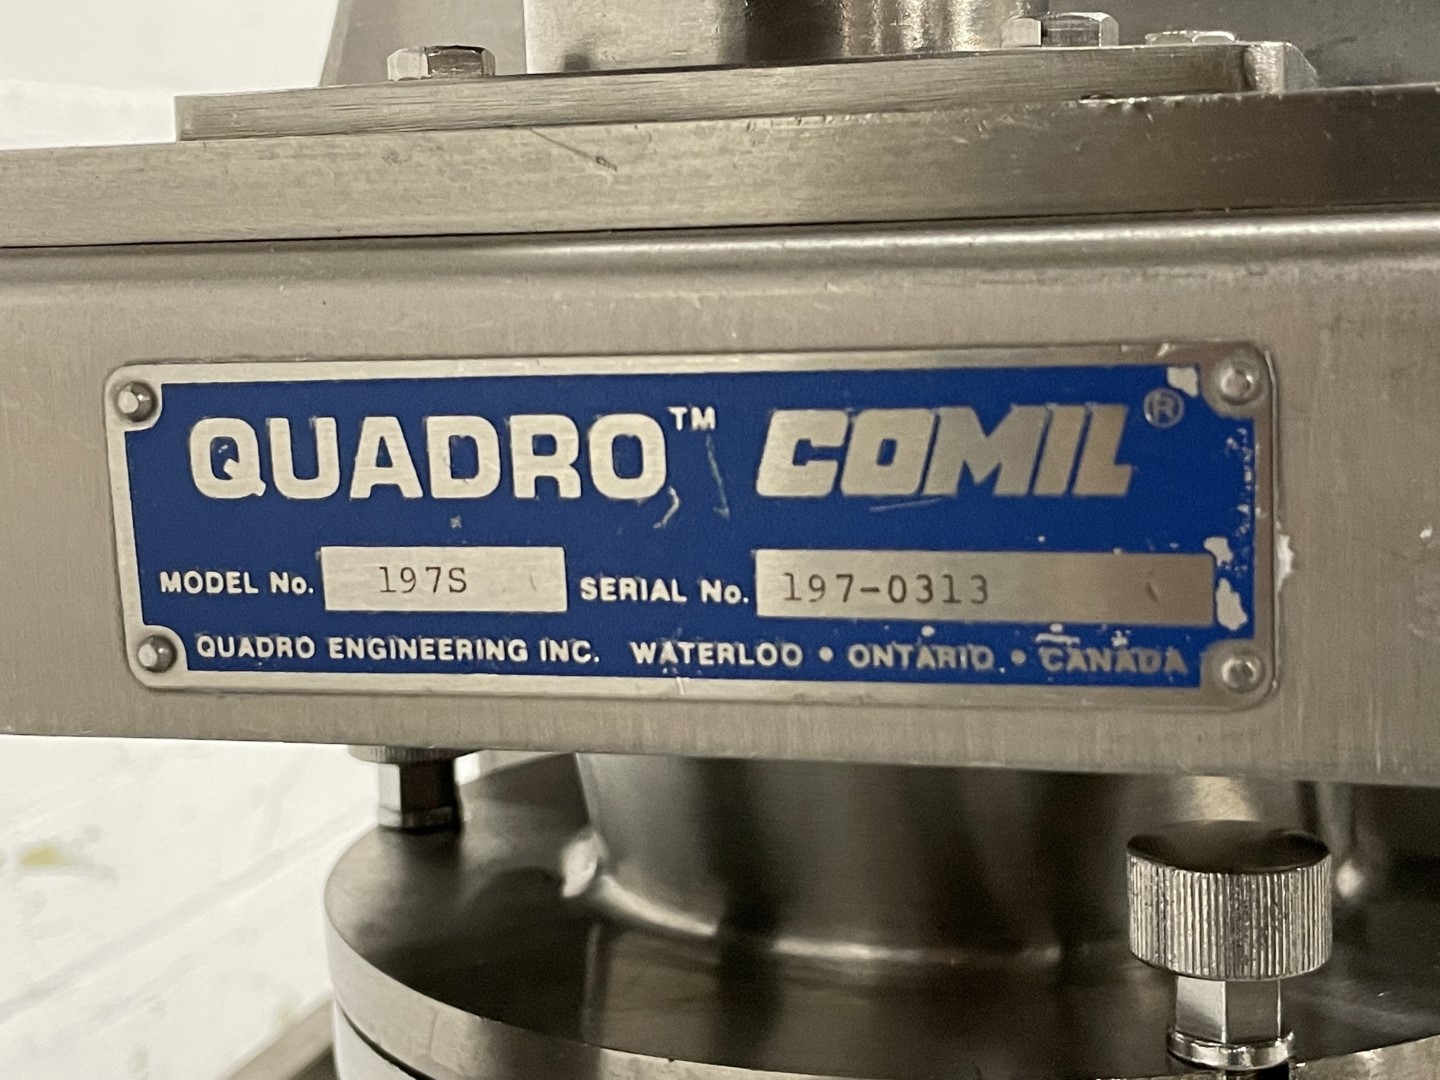 Quadro Comil, Model 197, S/S